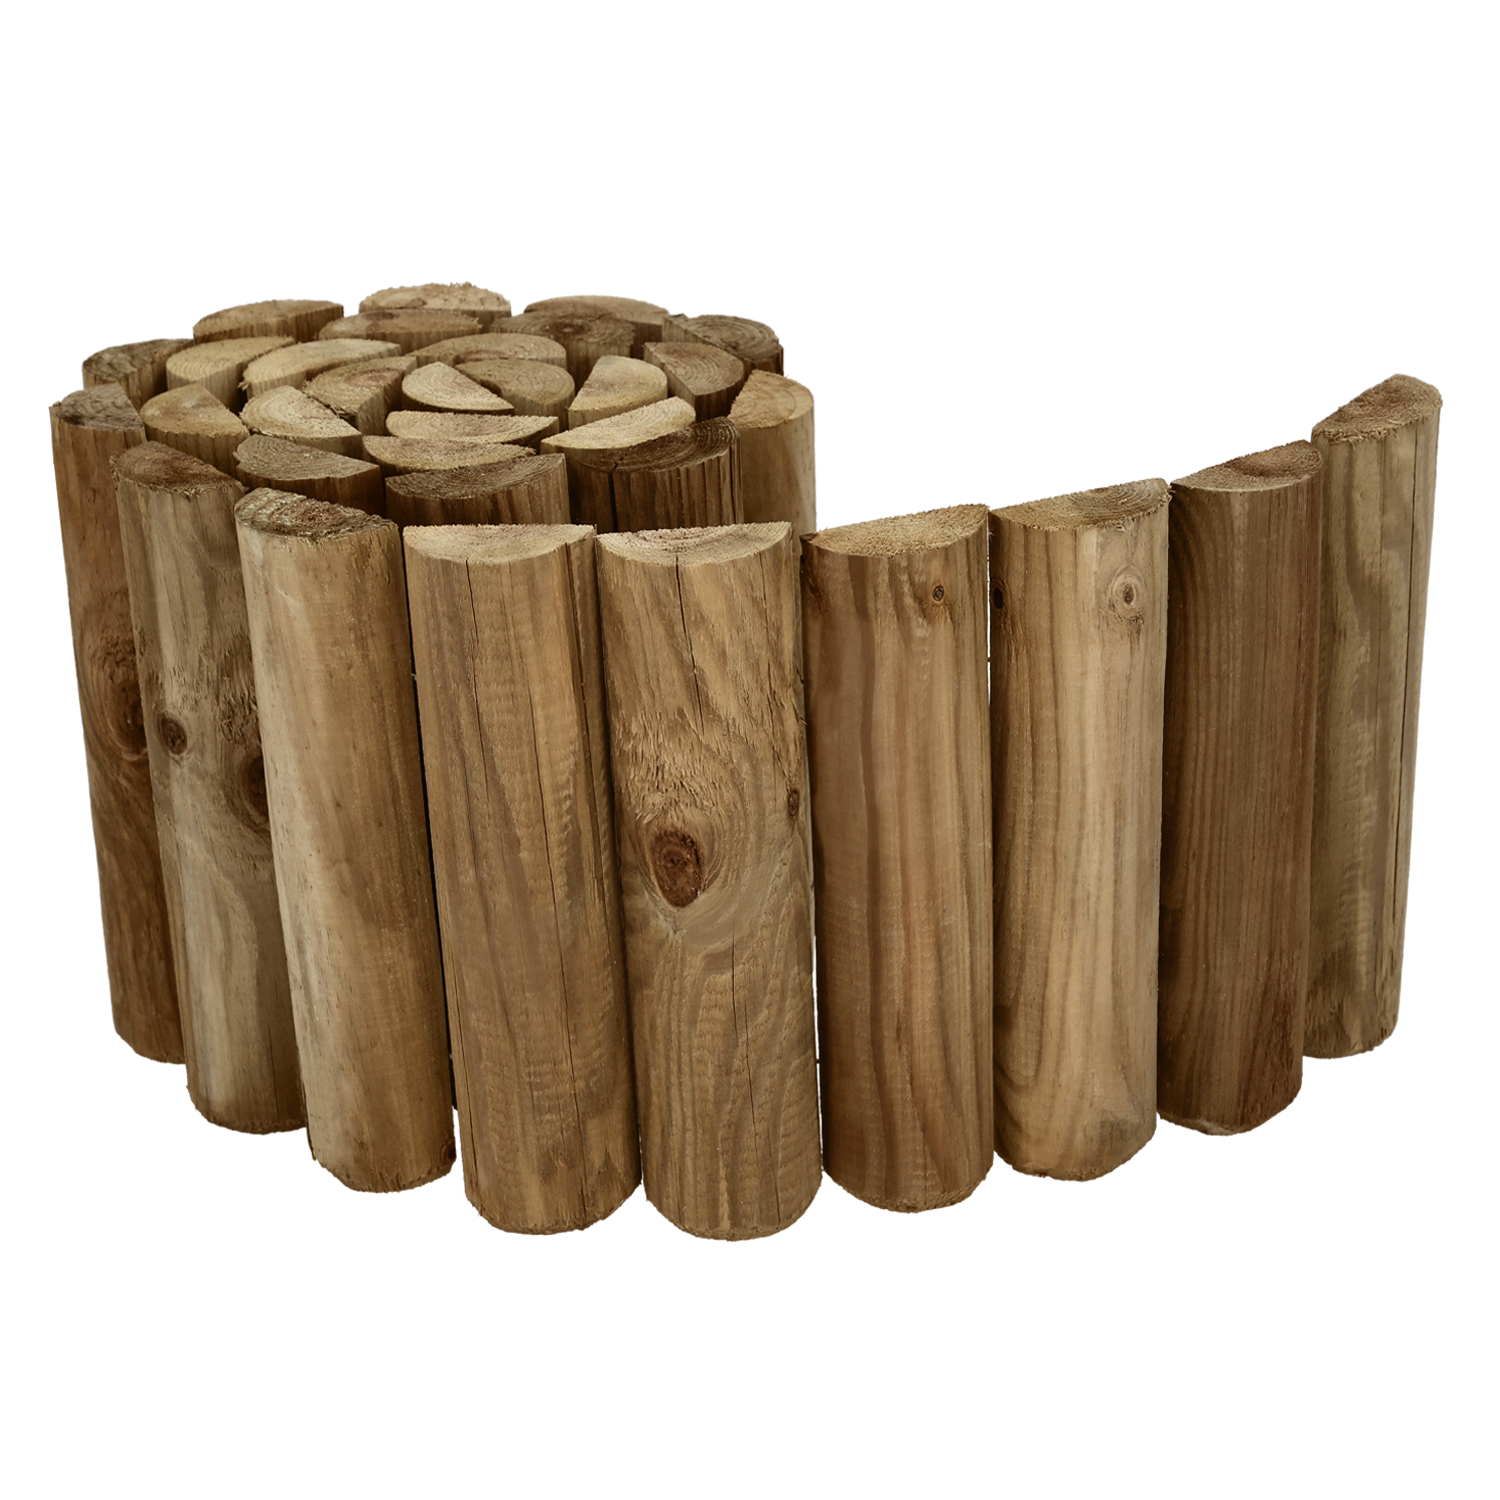 Bordura madera 6x30 (Alt.) cm. Longitud 2,5 metros. Bordo madera Flexible, Rollborder madera. Madera